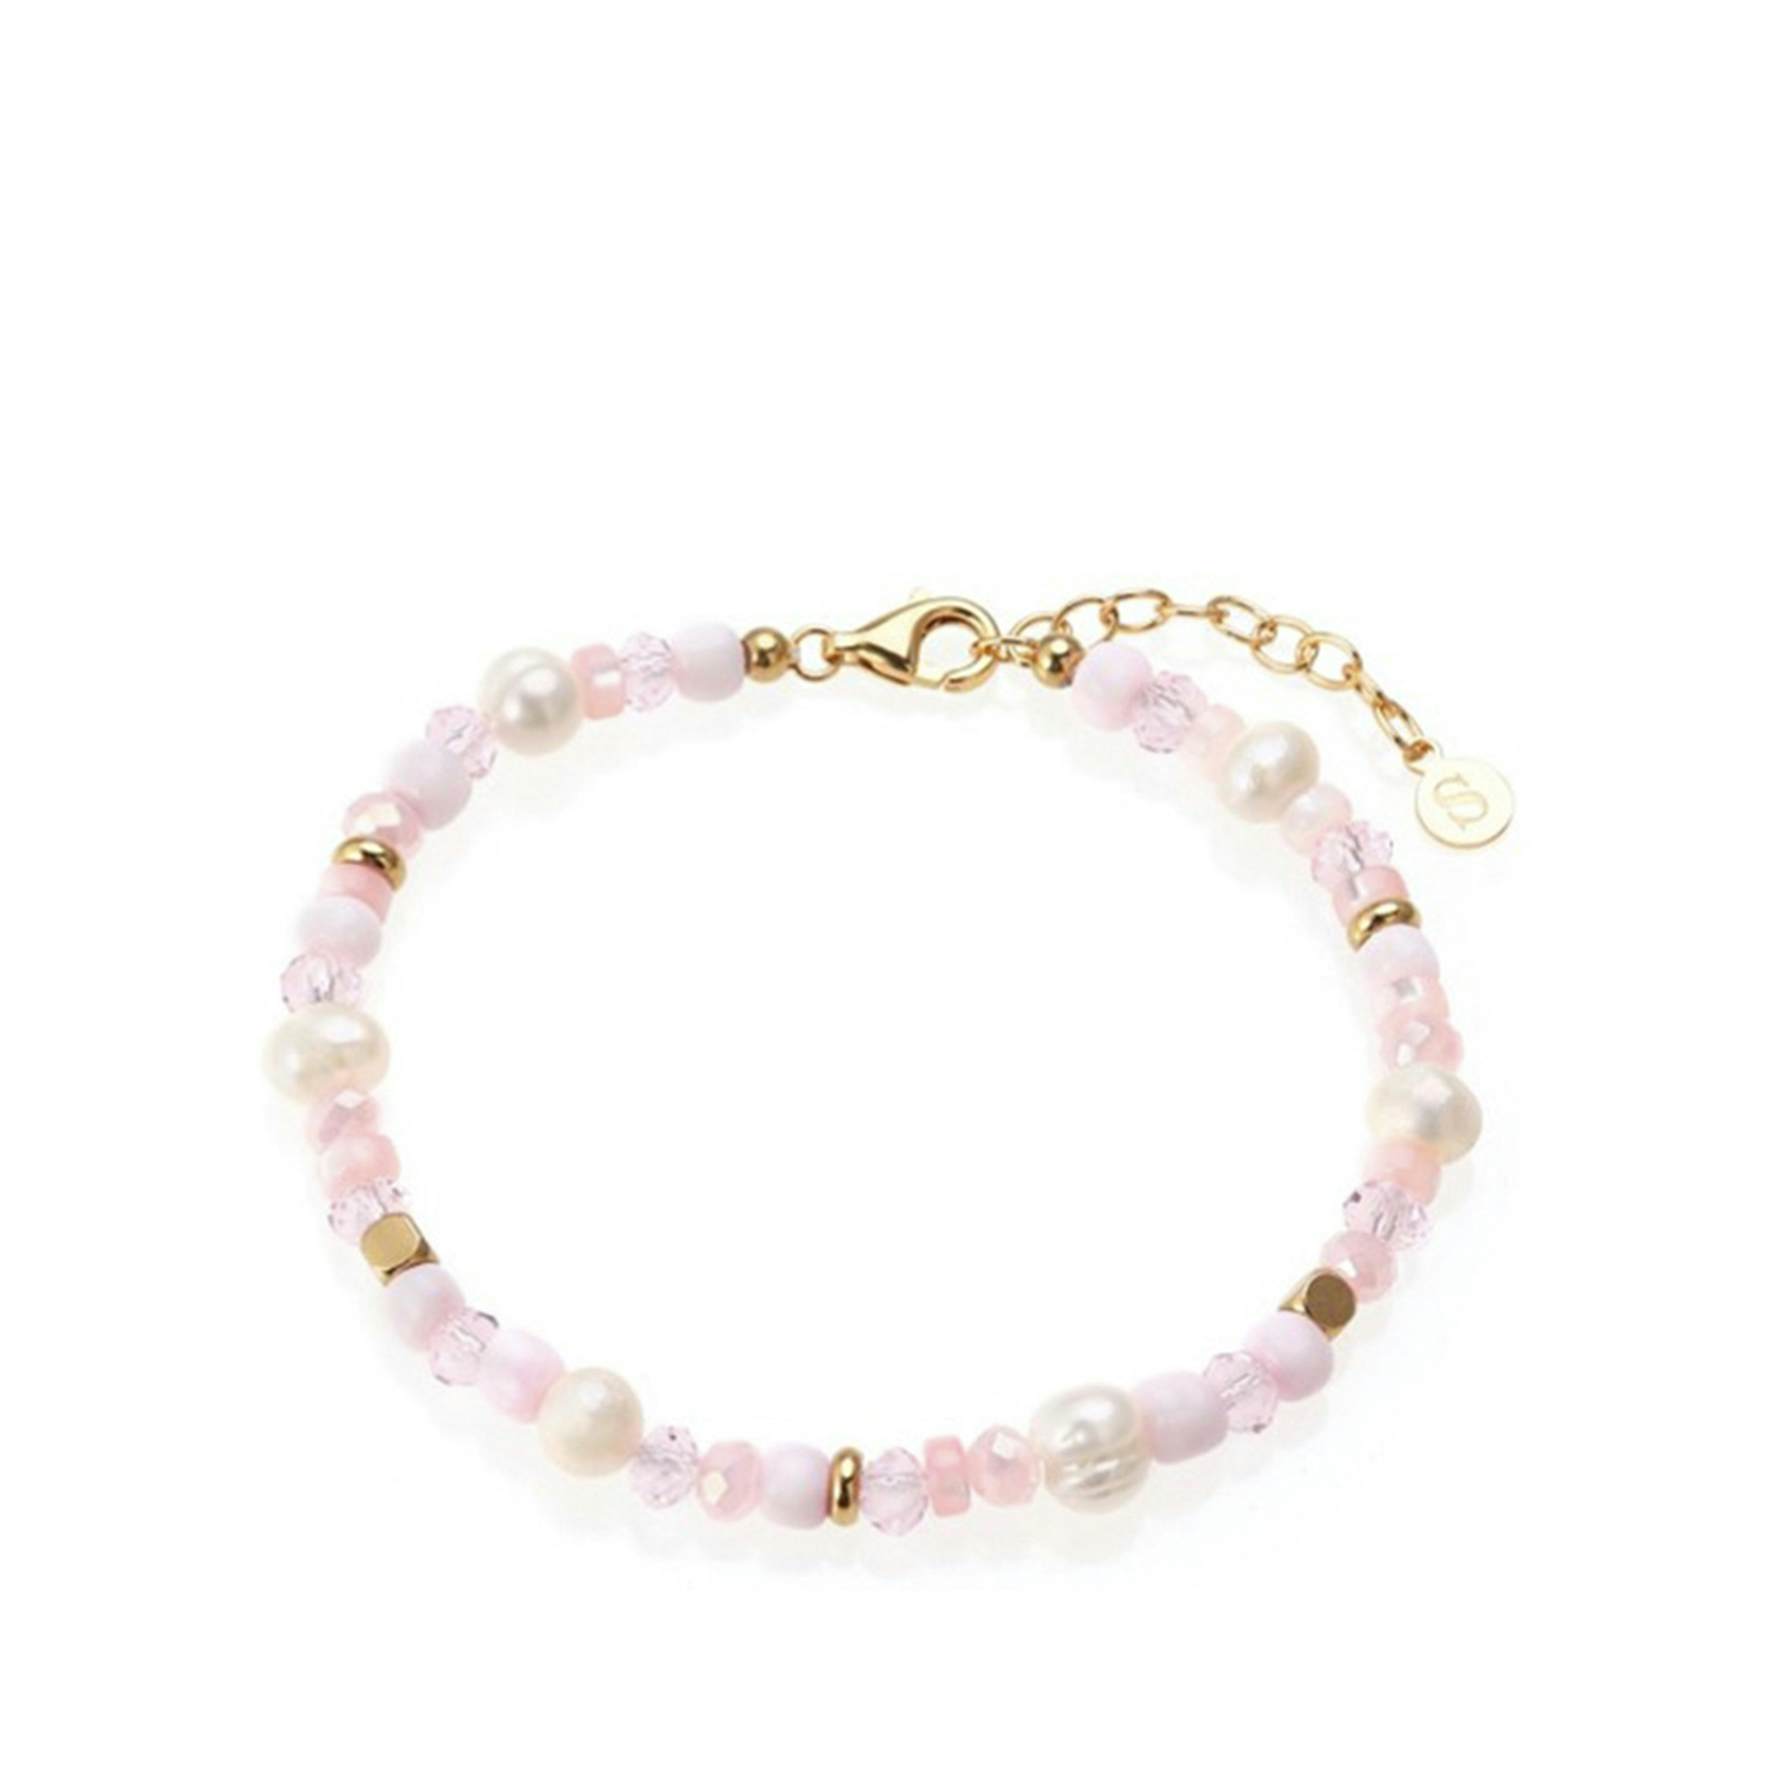 Kora Pearl Bracelet Light Pink von Sistie in Vergoldet-Silber Sterling 925